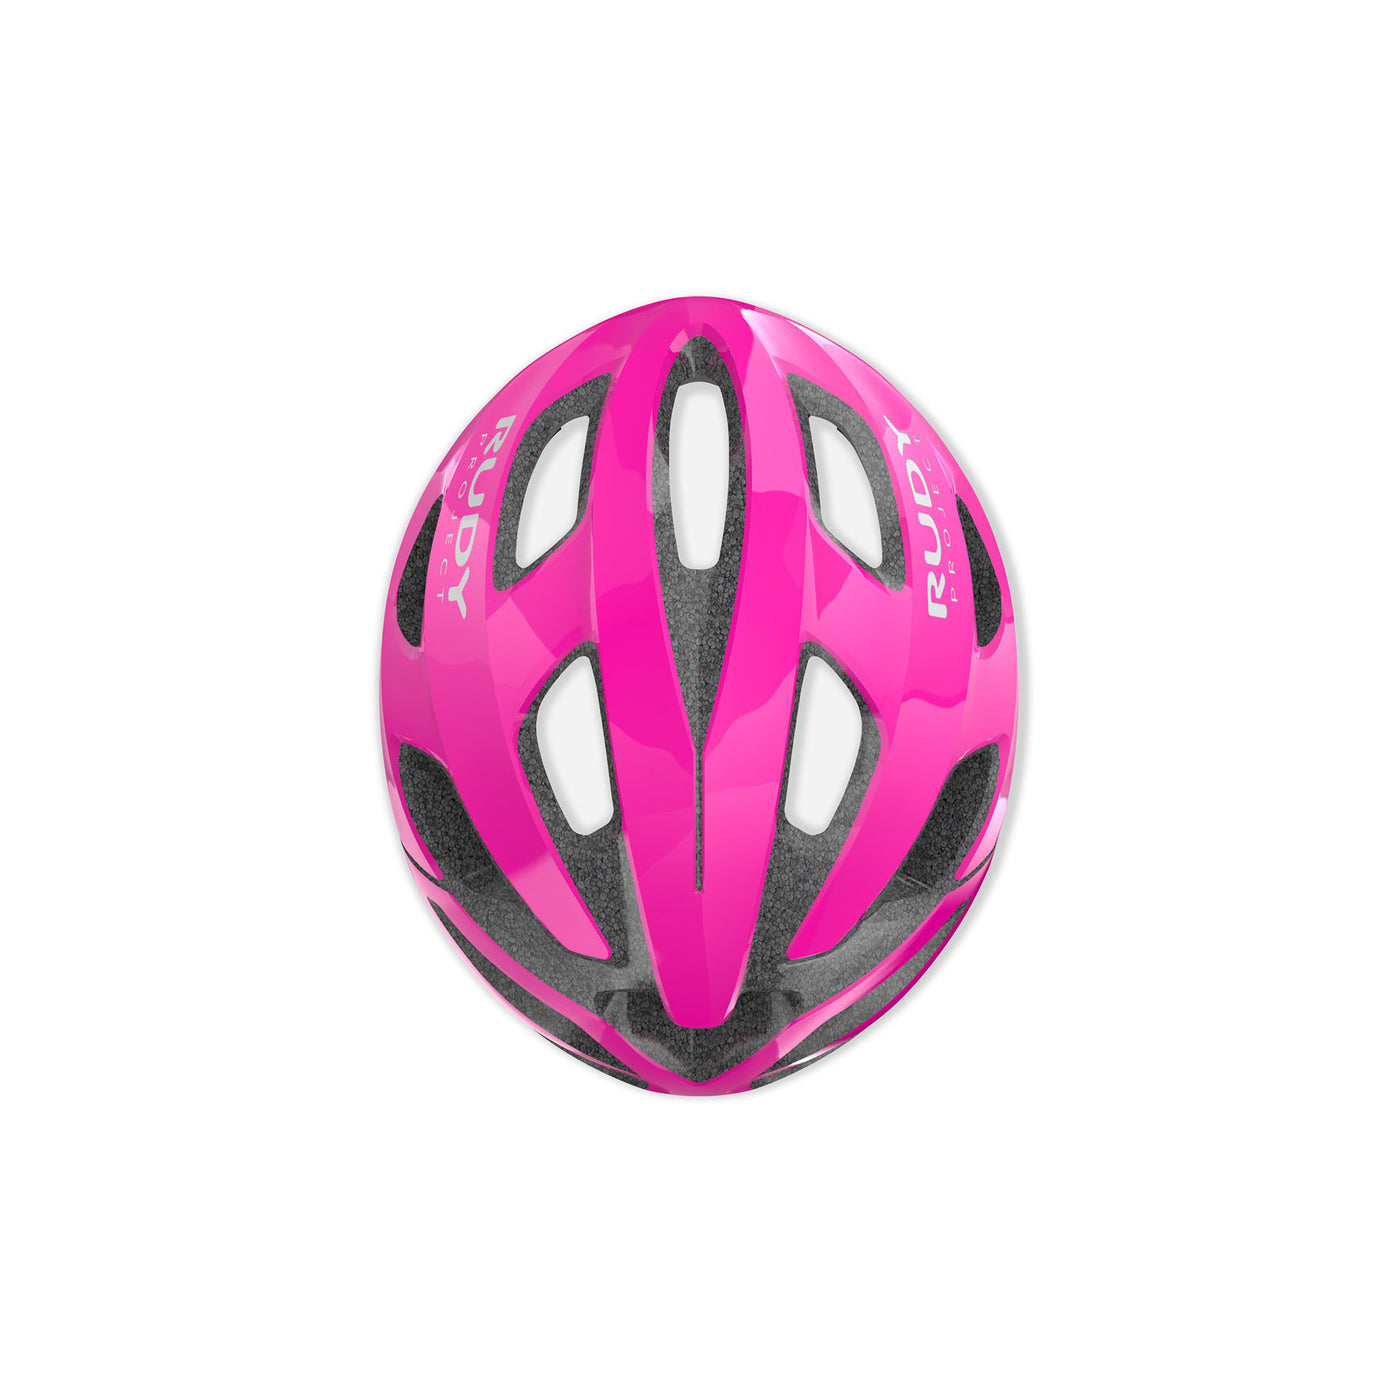 Rudy Project Strym Z cycling and bike helmet#color_strym-z-pink-shiny